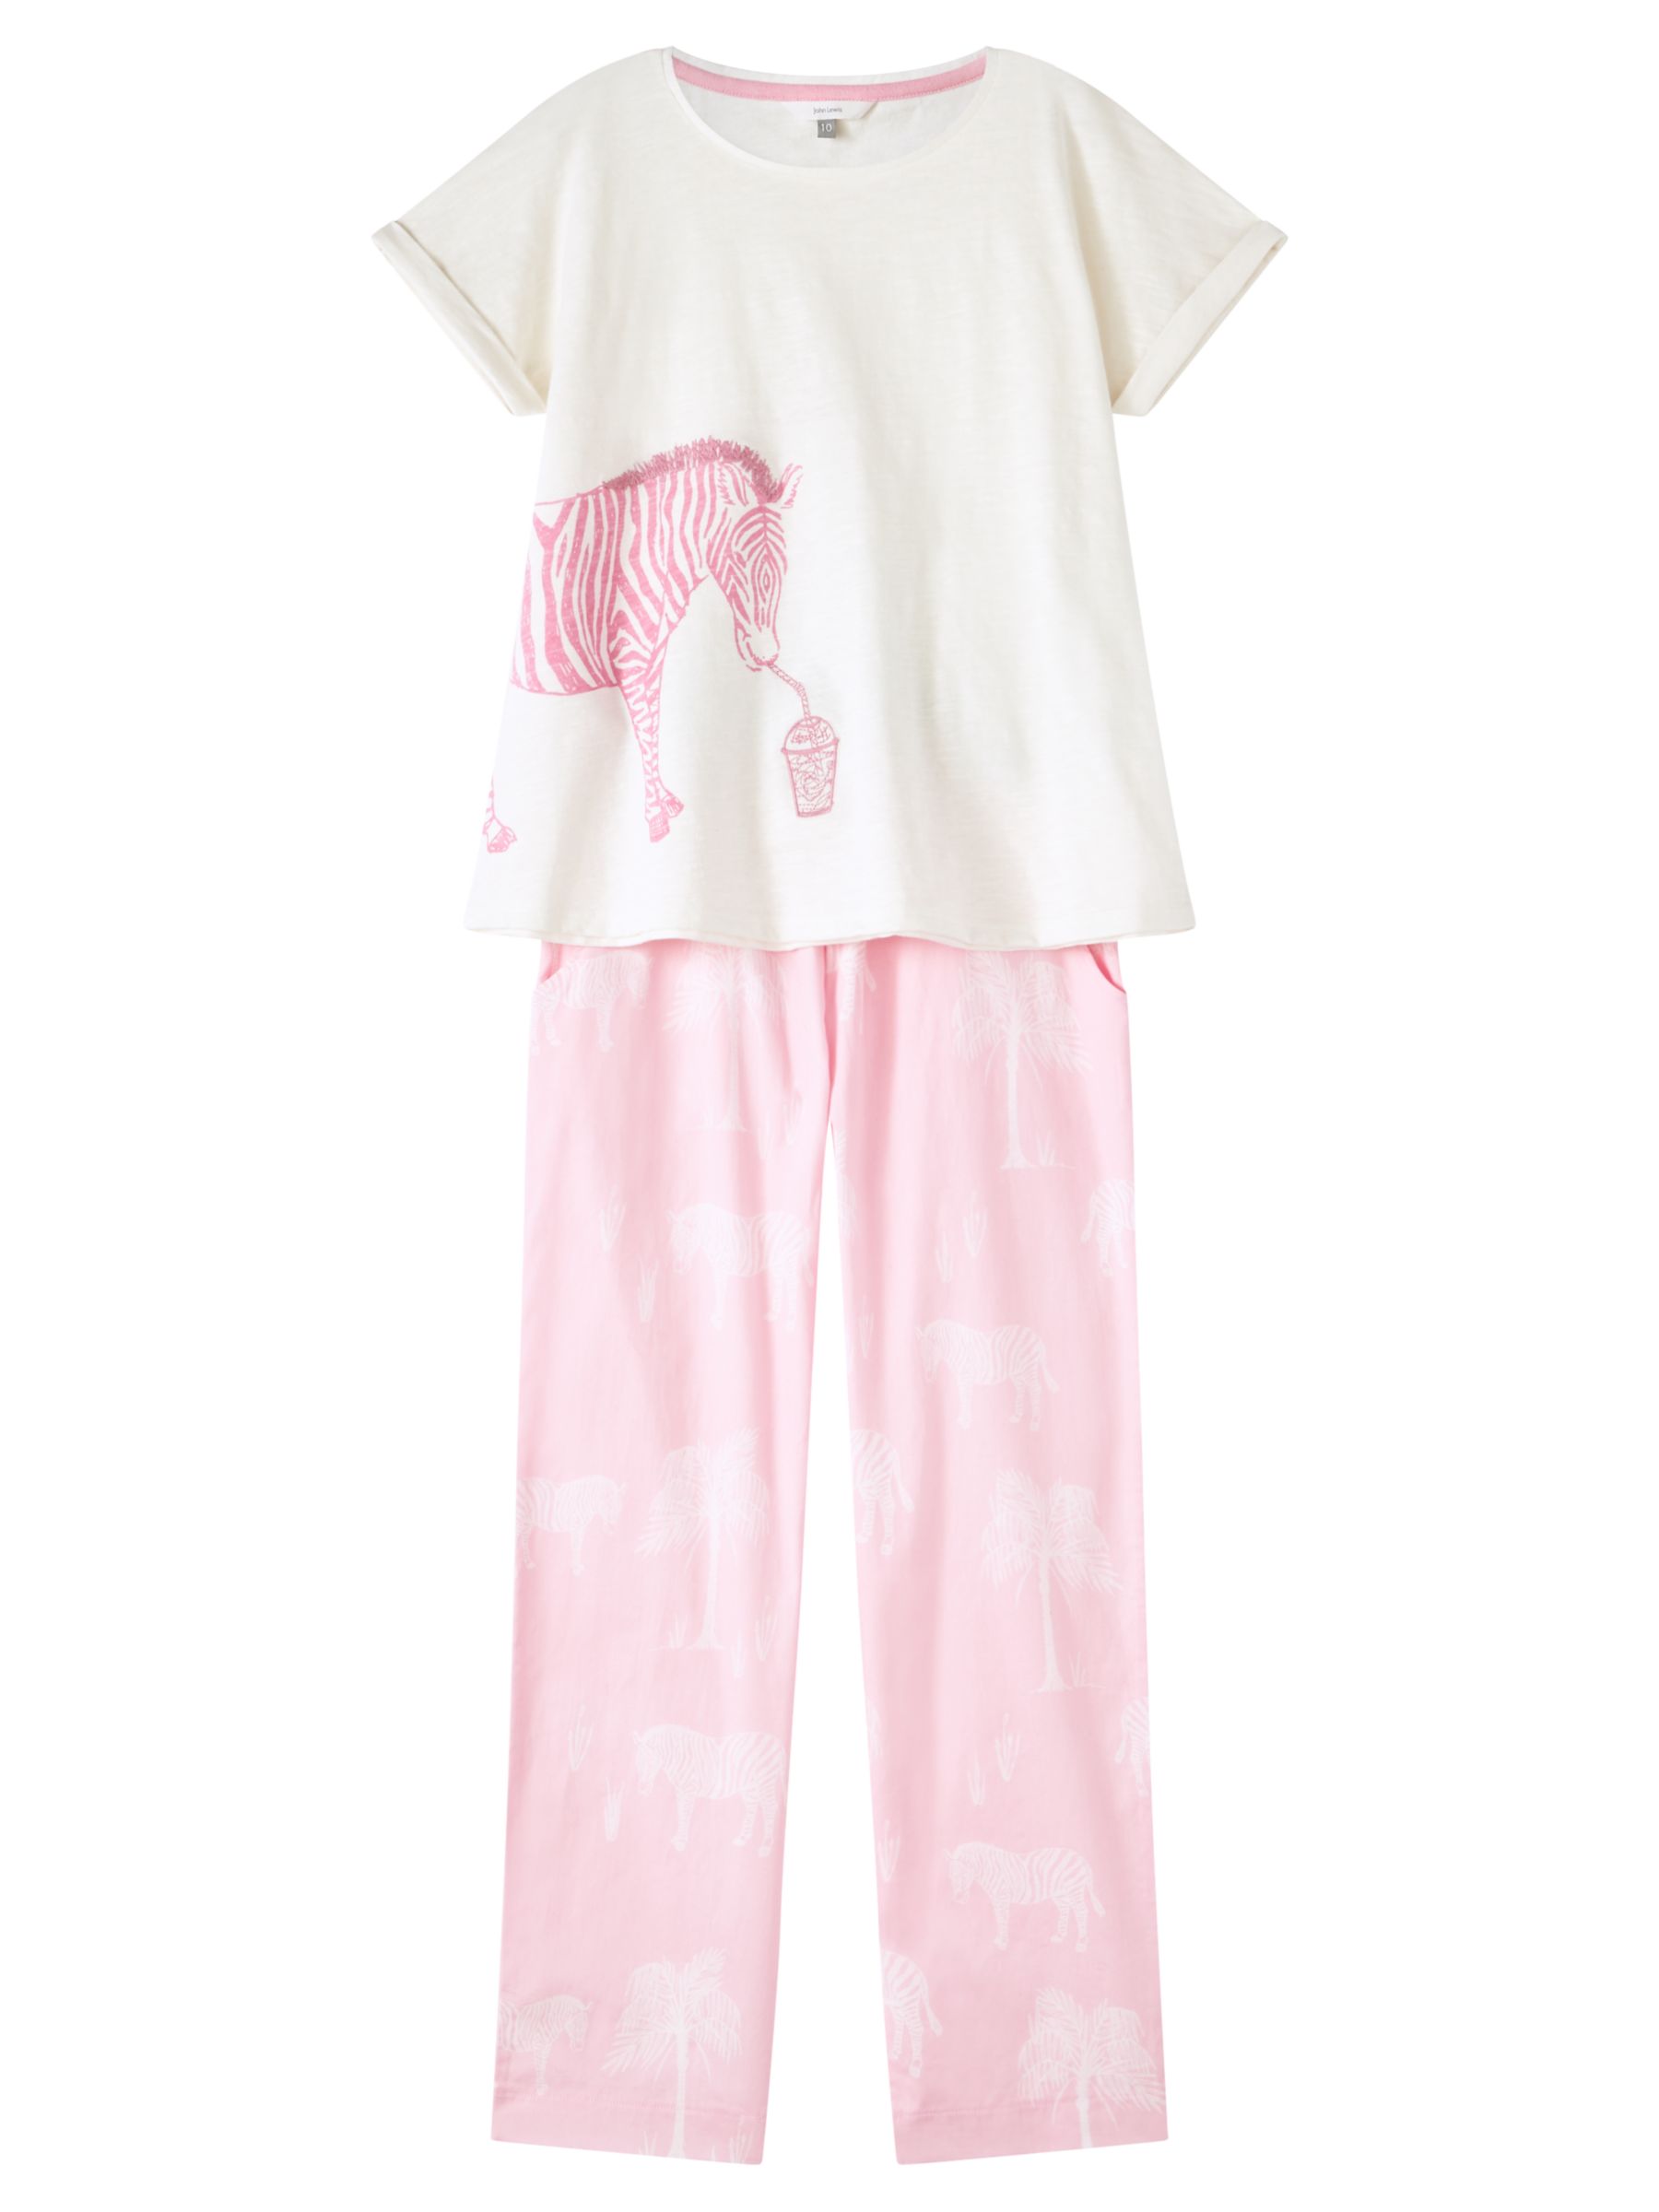 John Lewis & Partners Girls' Zebra Print Pyjamas, Pink